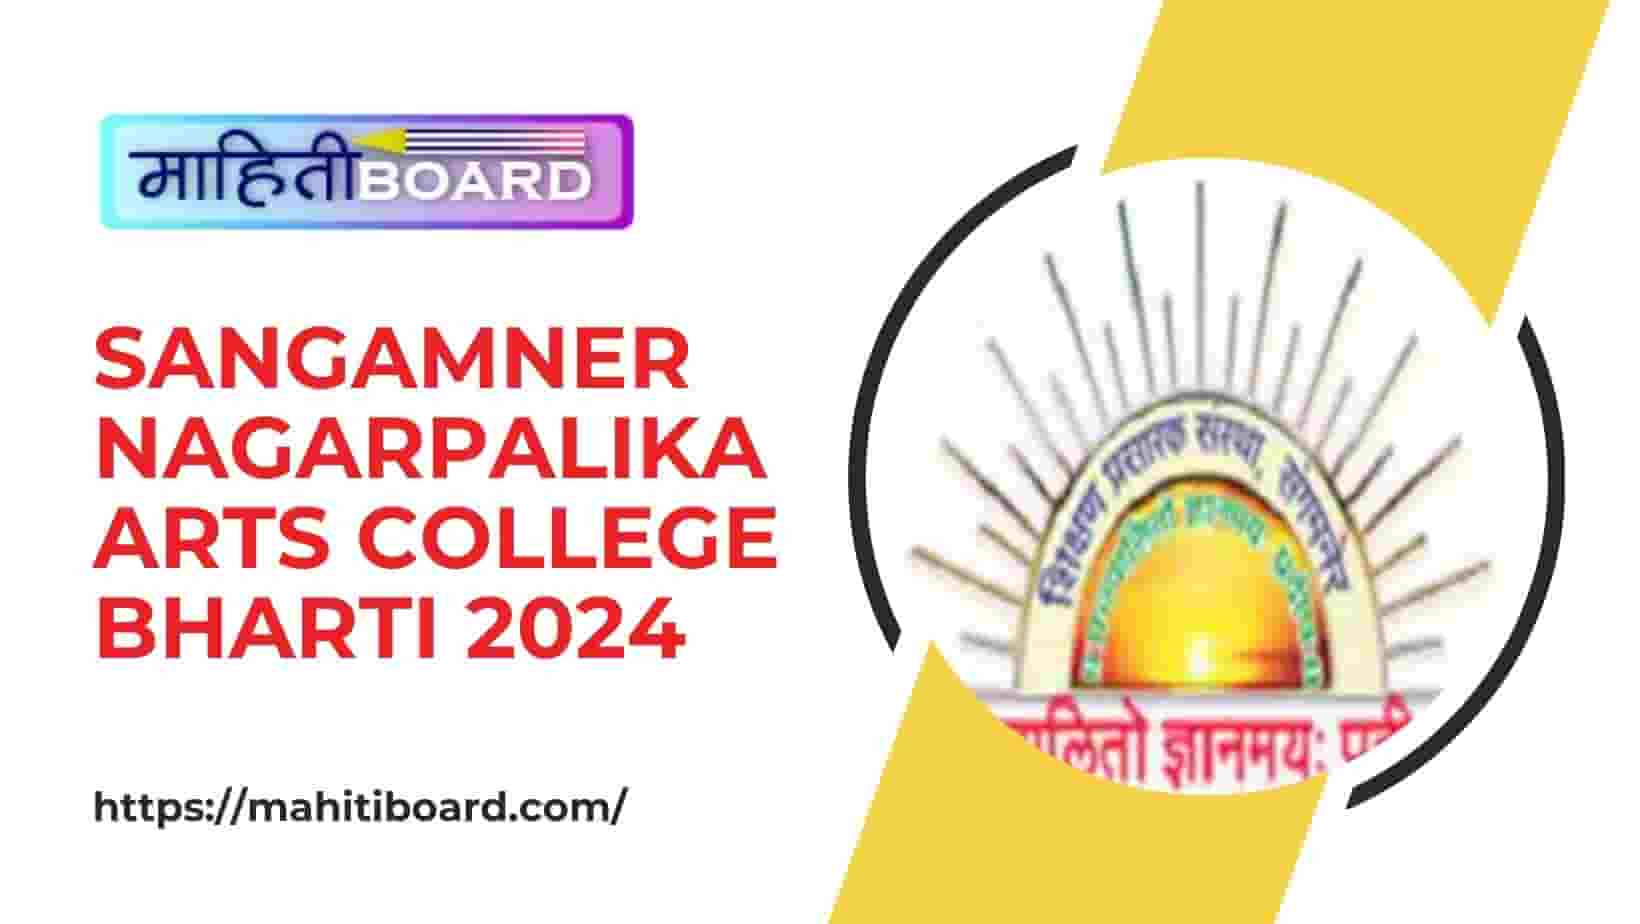 Sangamner Nagarpalika Arts College Bharti 2024